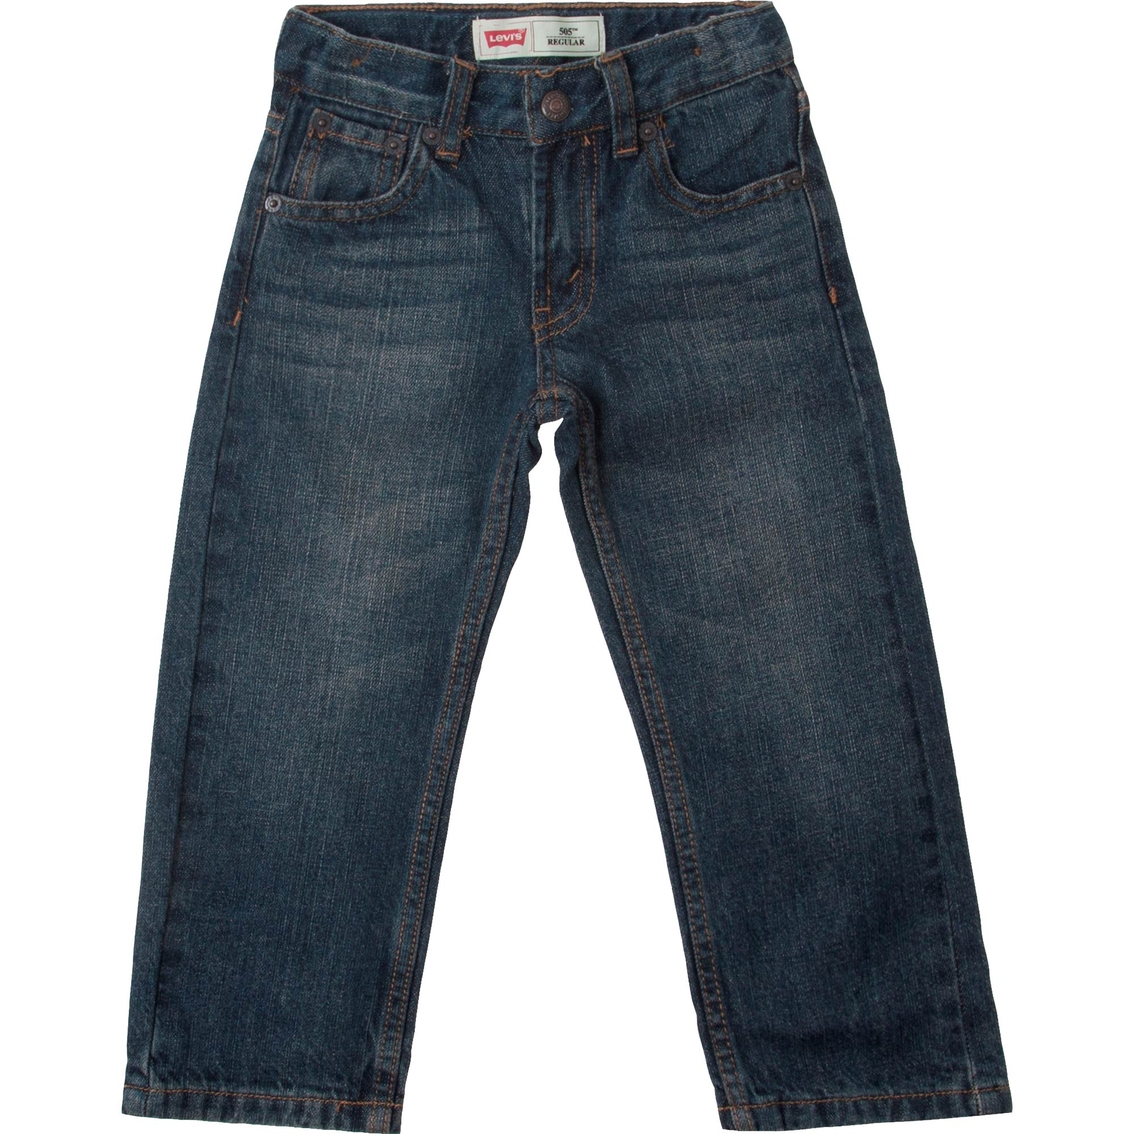 Levi's Toddler Boys 505 Regular Fit Jeans | Toddler Boys 2t-4t ...